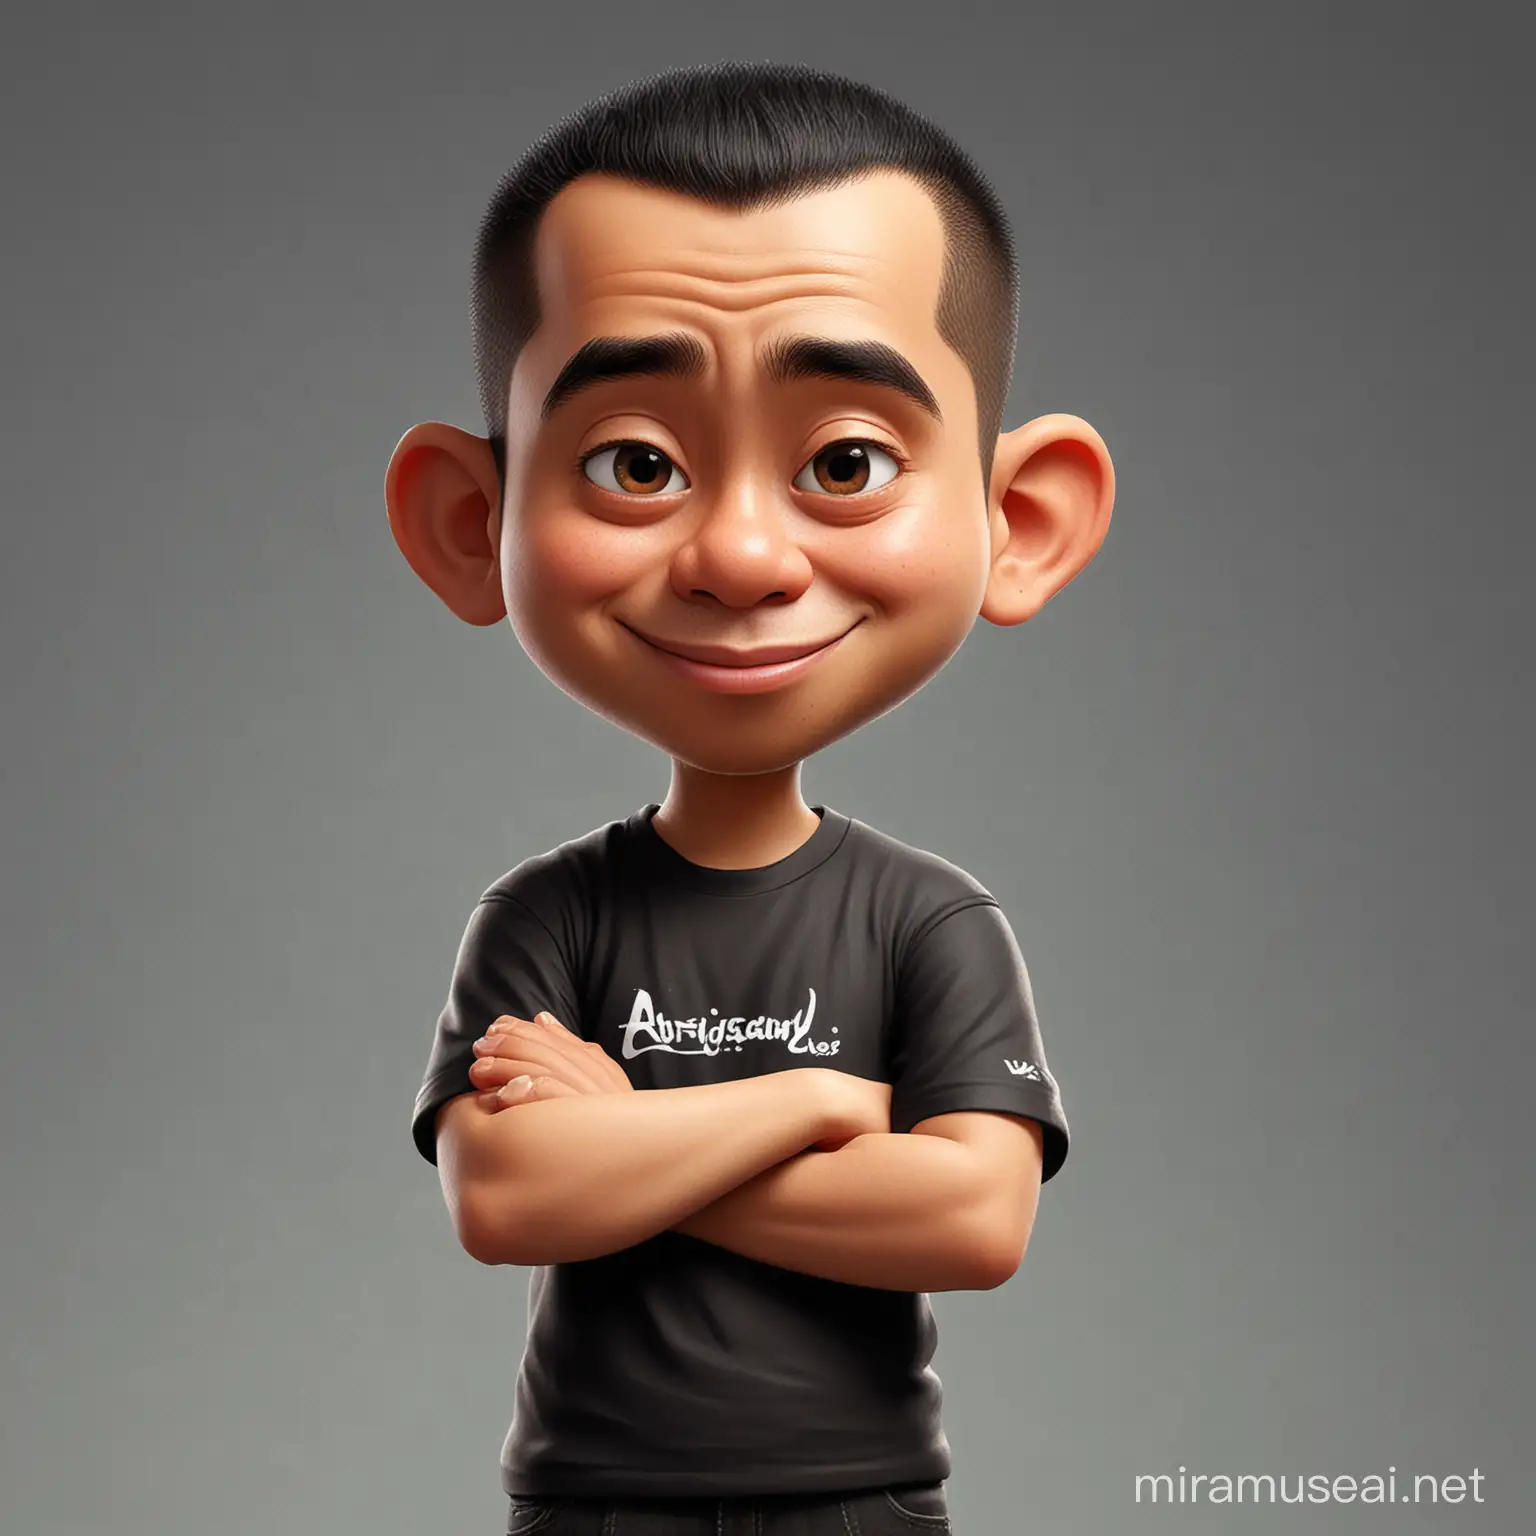 A caricature of an indonesian man wearing black t-shirt, miniature, pixar style, buzz cut